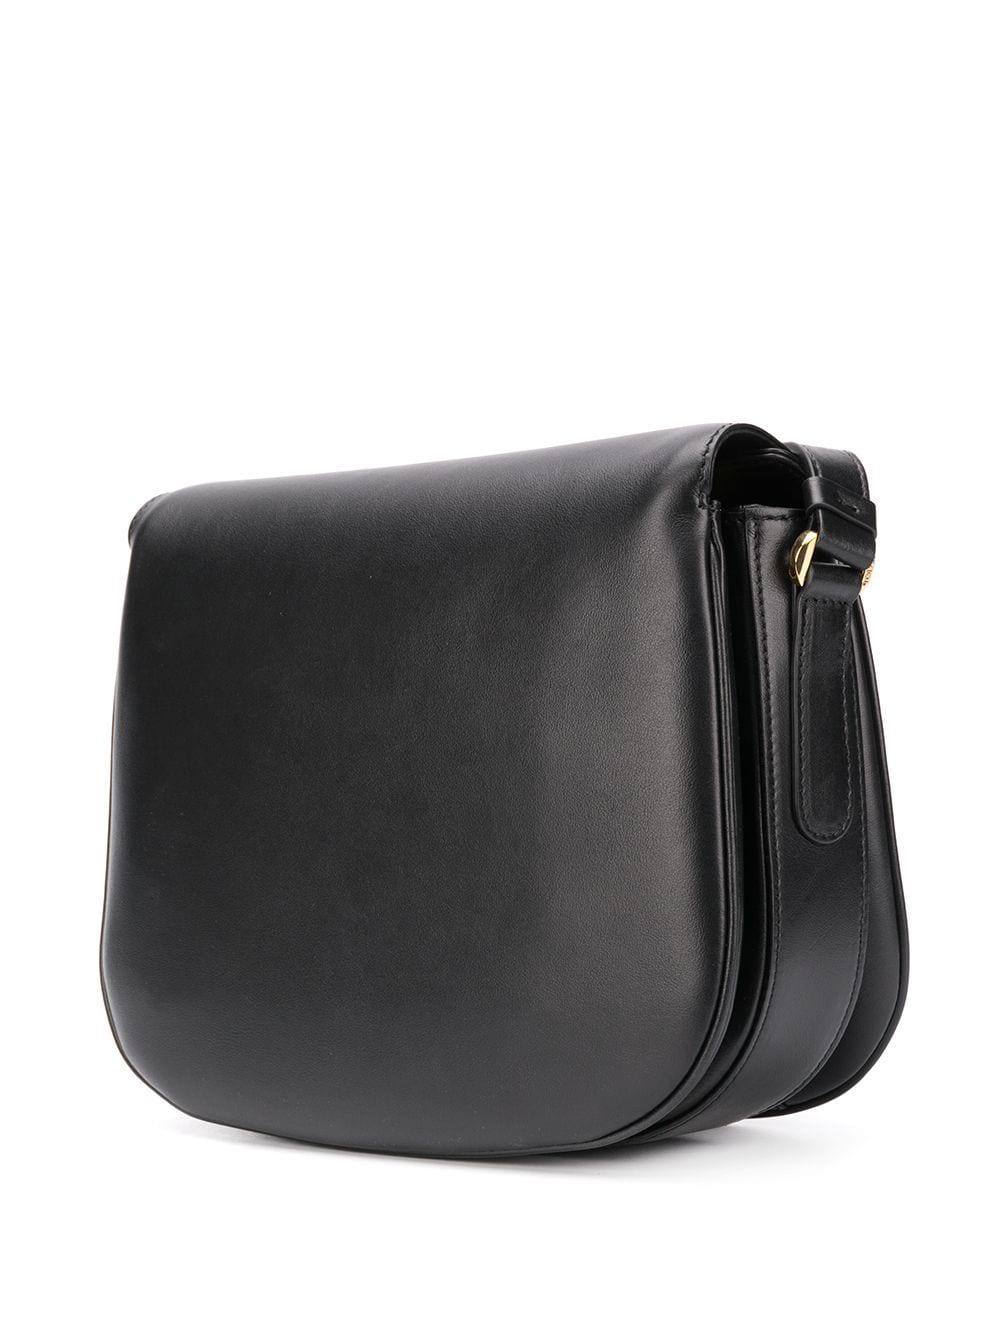 Tod's Leather Mini Crossbody Bag in Black | Lyst